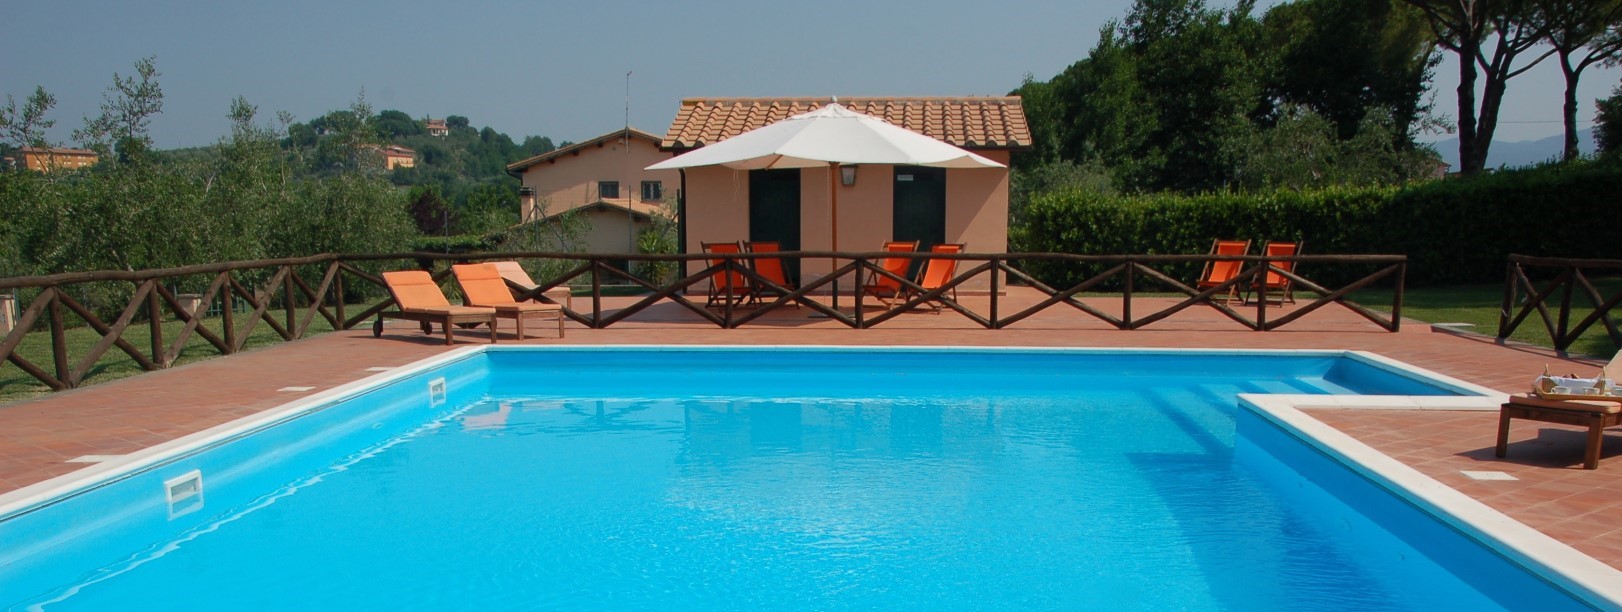 429_3f63149_Villa Domitilla en Villa Sveva, vakantiehuis met privé zwembad, Sabina, Rome (5) kopie